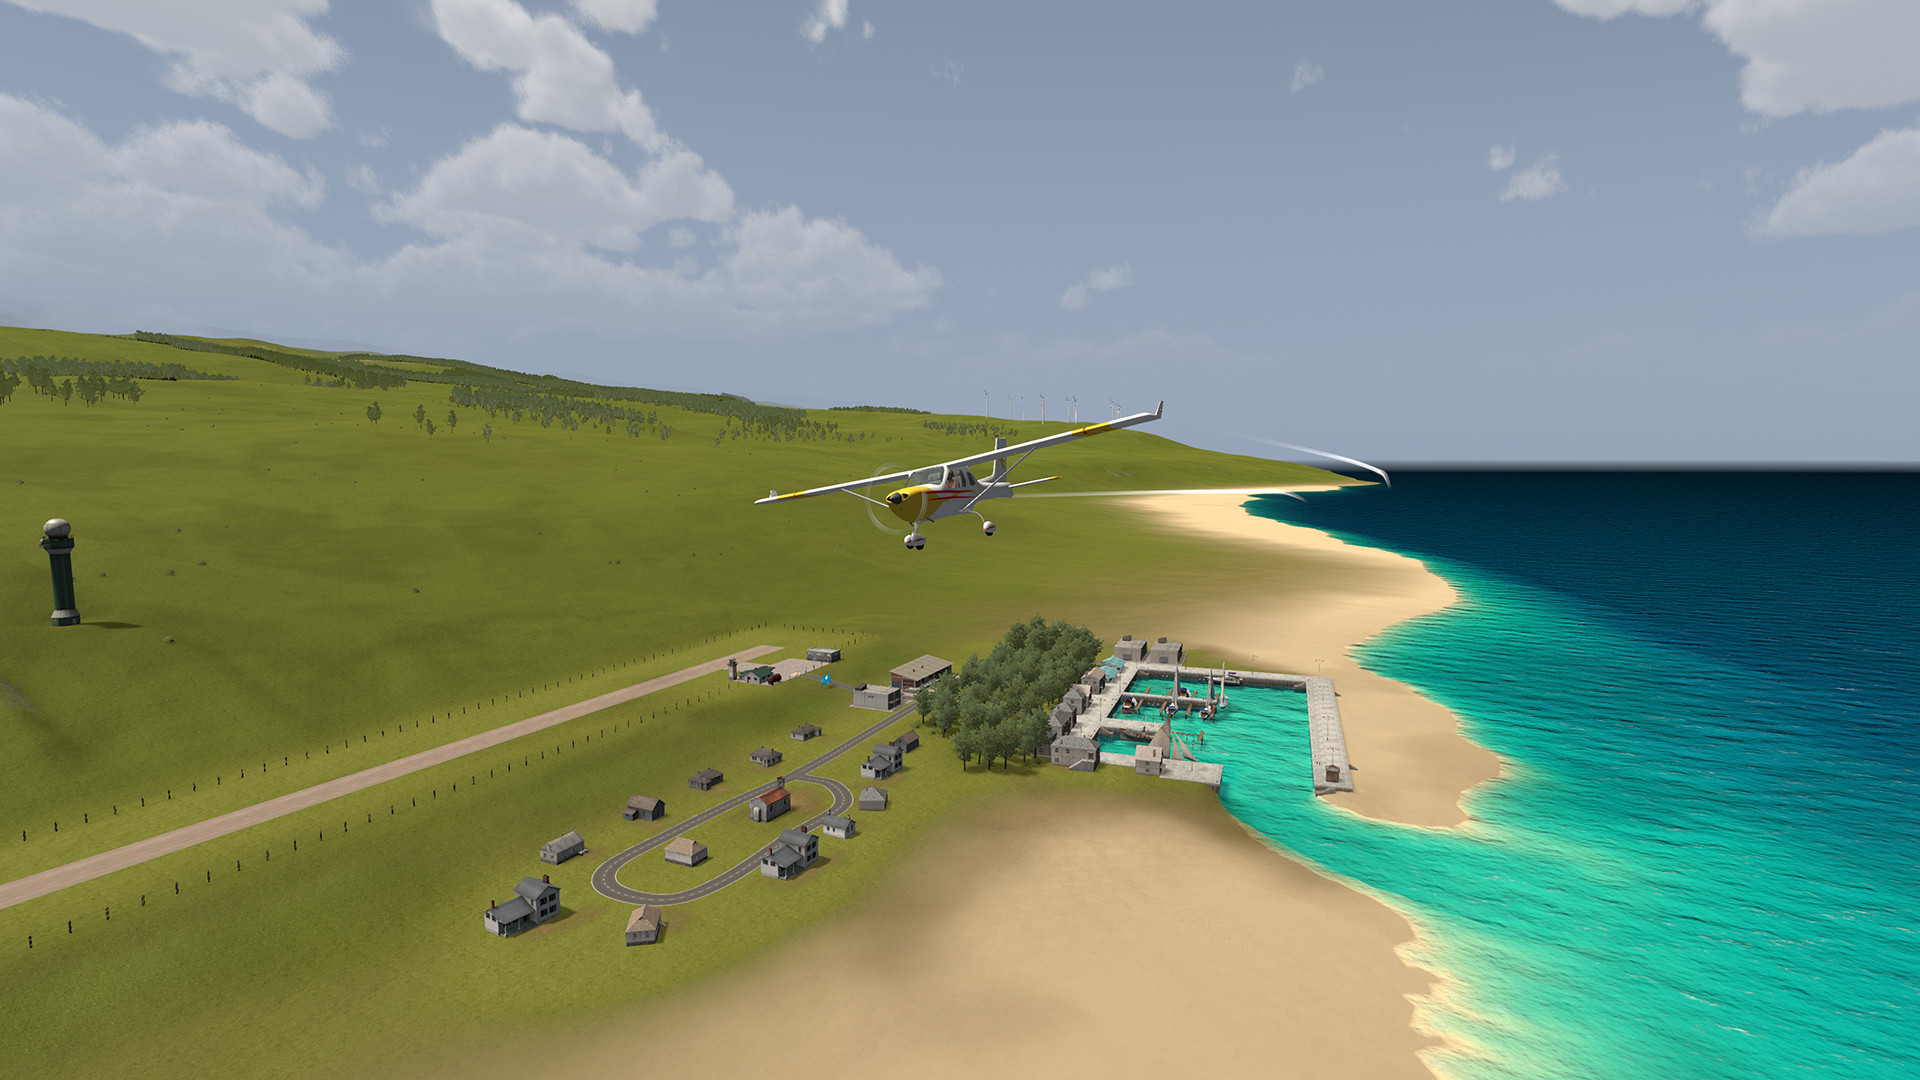 Coastline Flight Simulator Free Download